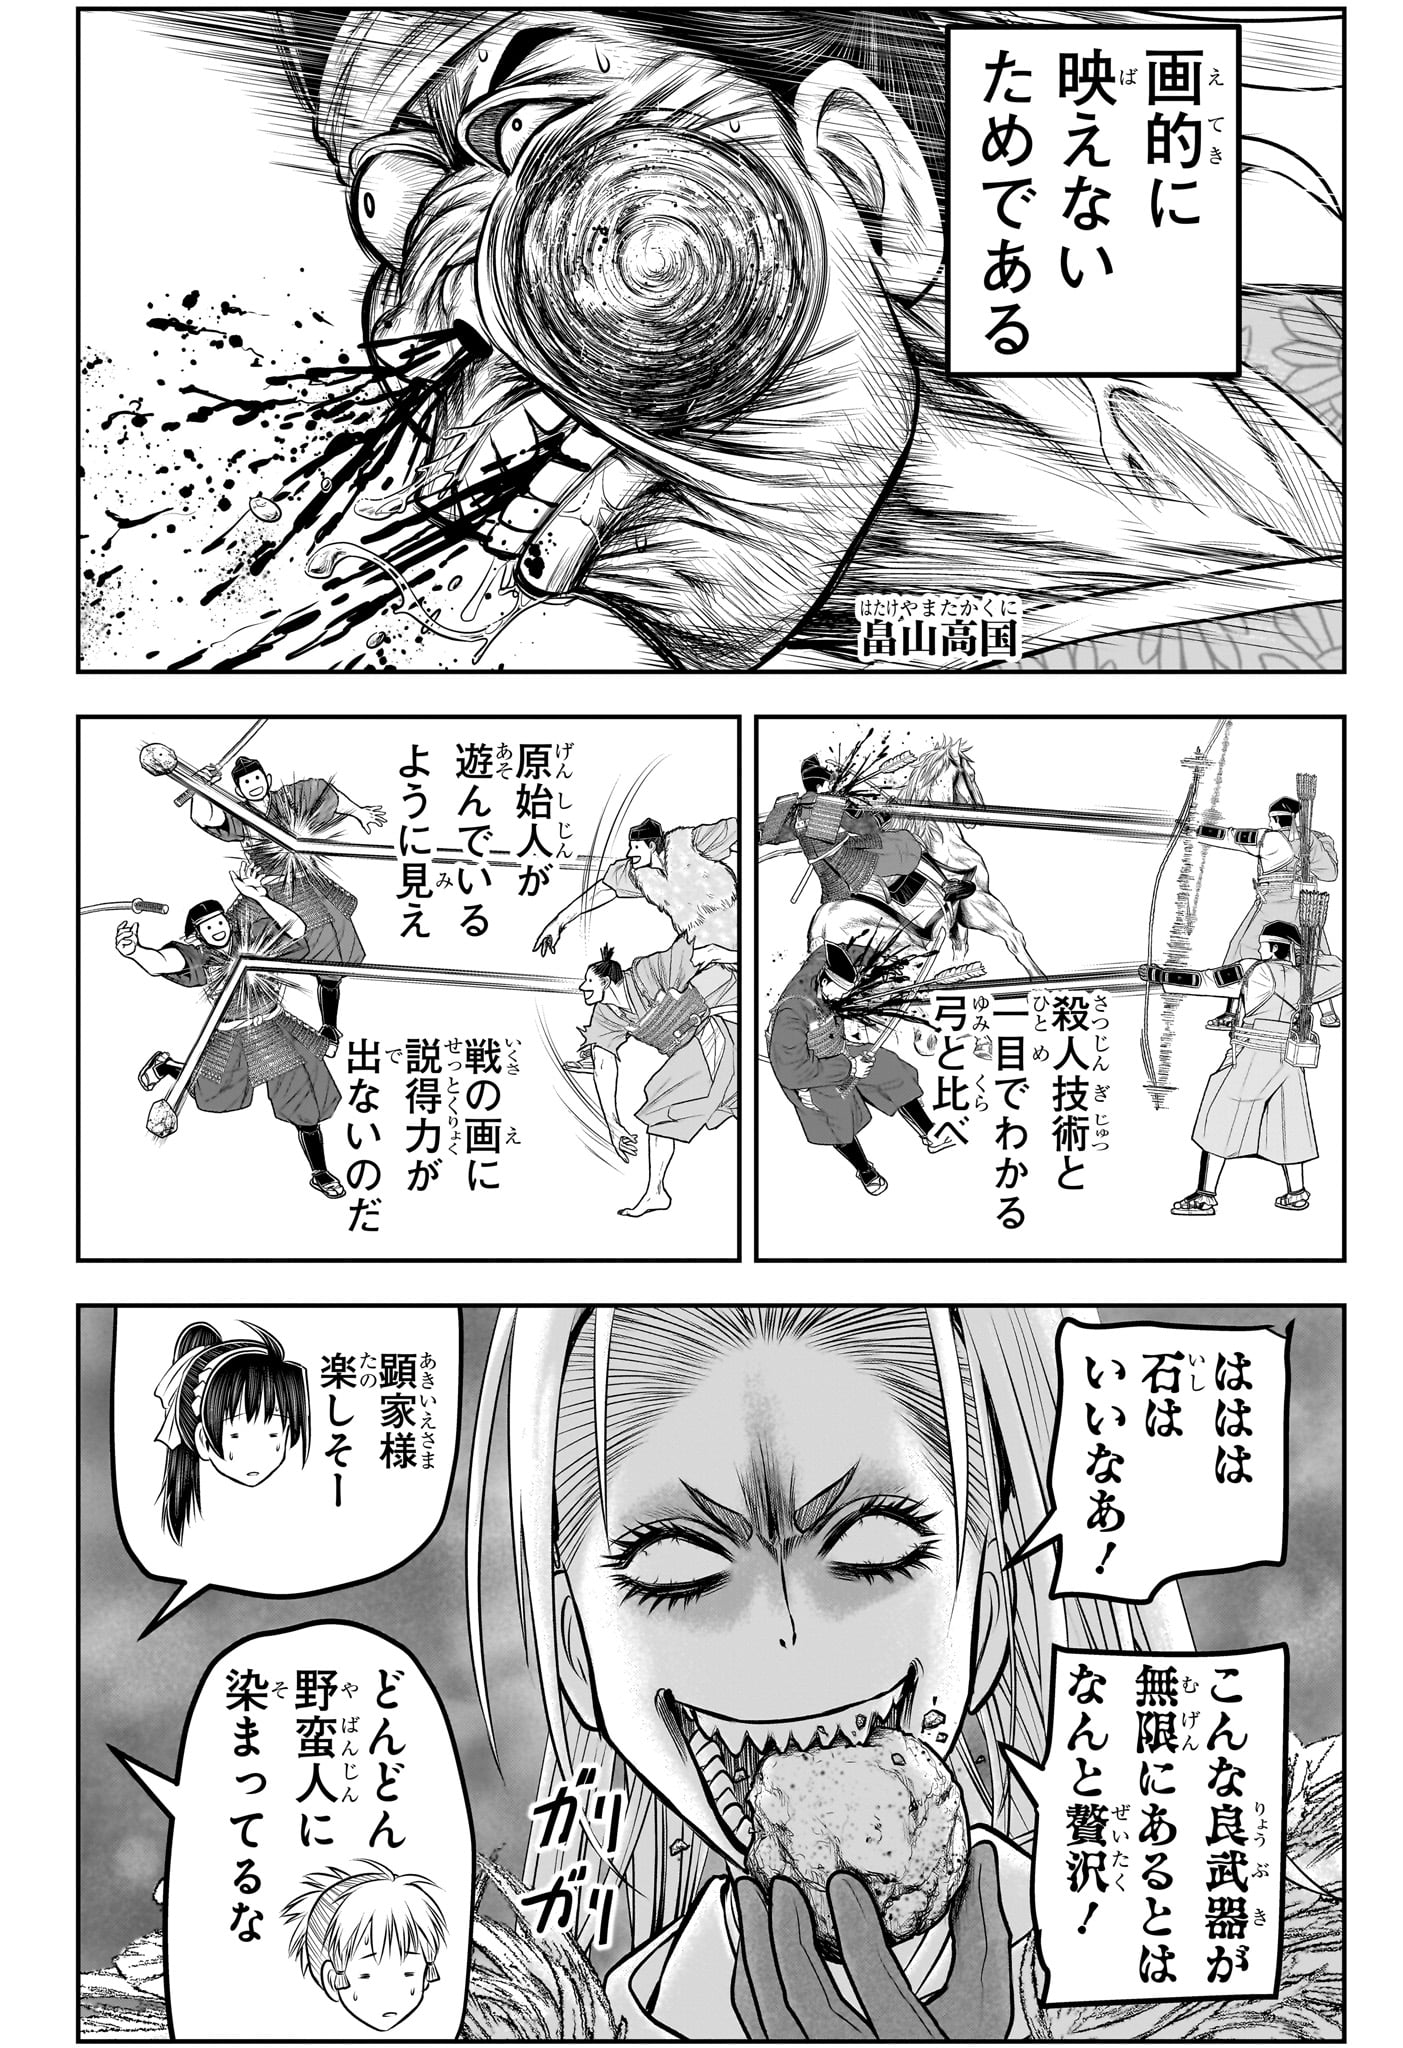 Nige Jouzu no Wakagimi - Chapter 157 - Page 8